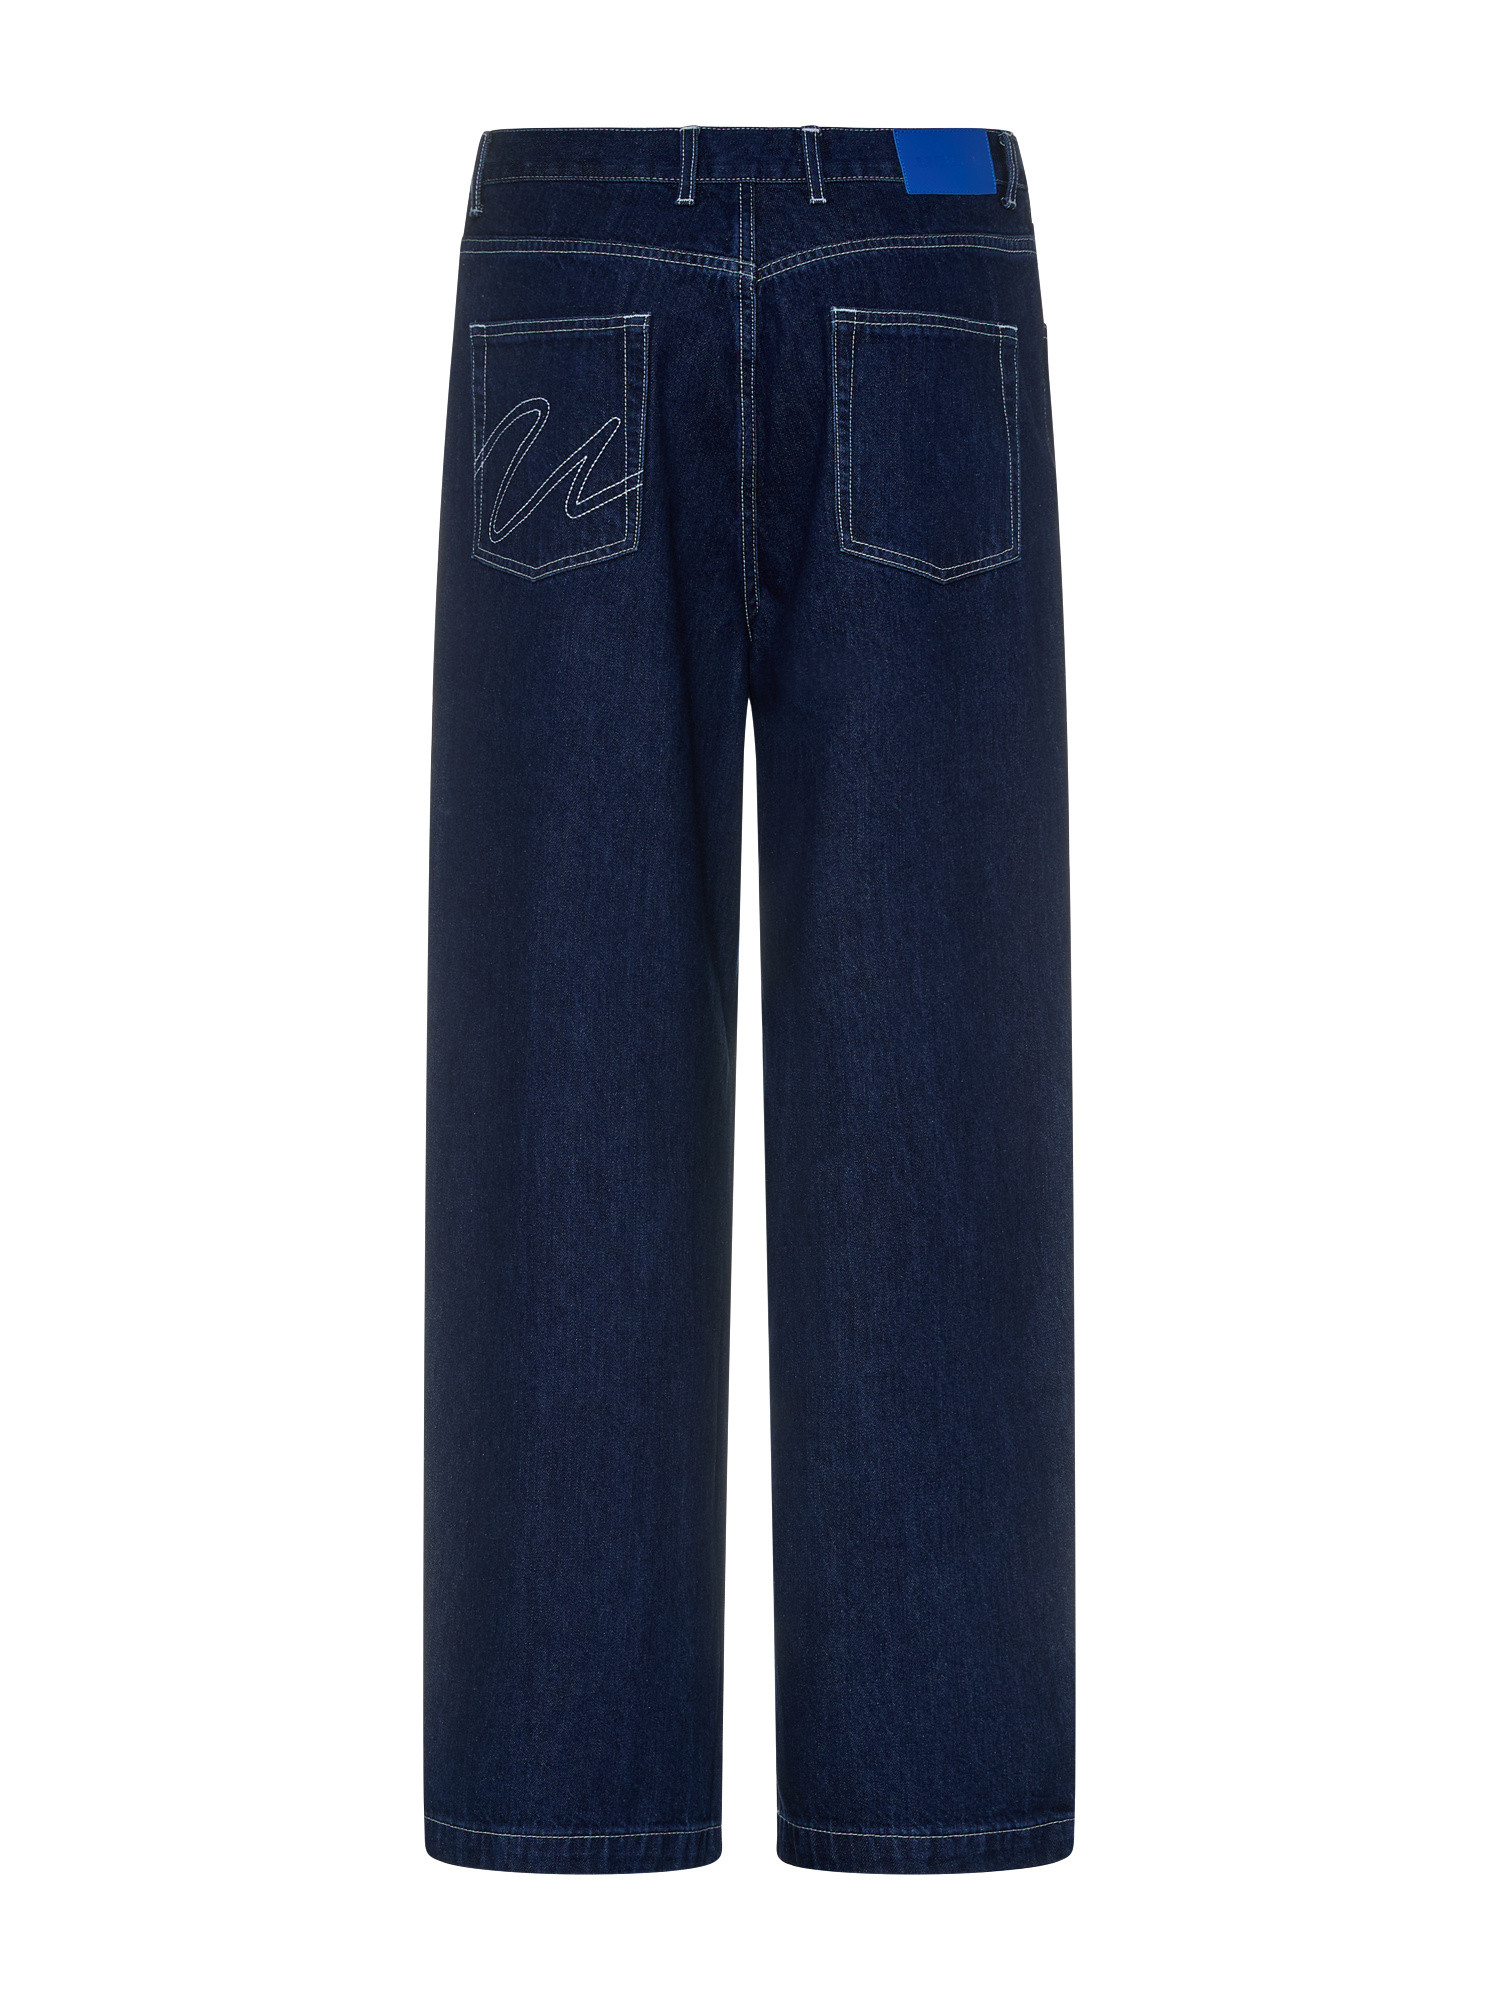 Usual - Giga Denim Pants, Dark Blue, large image number 1